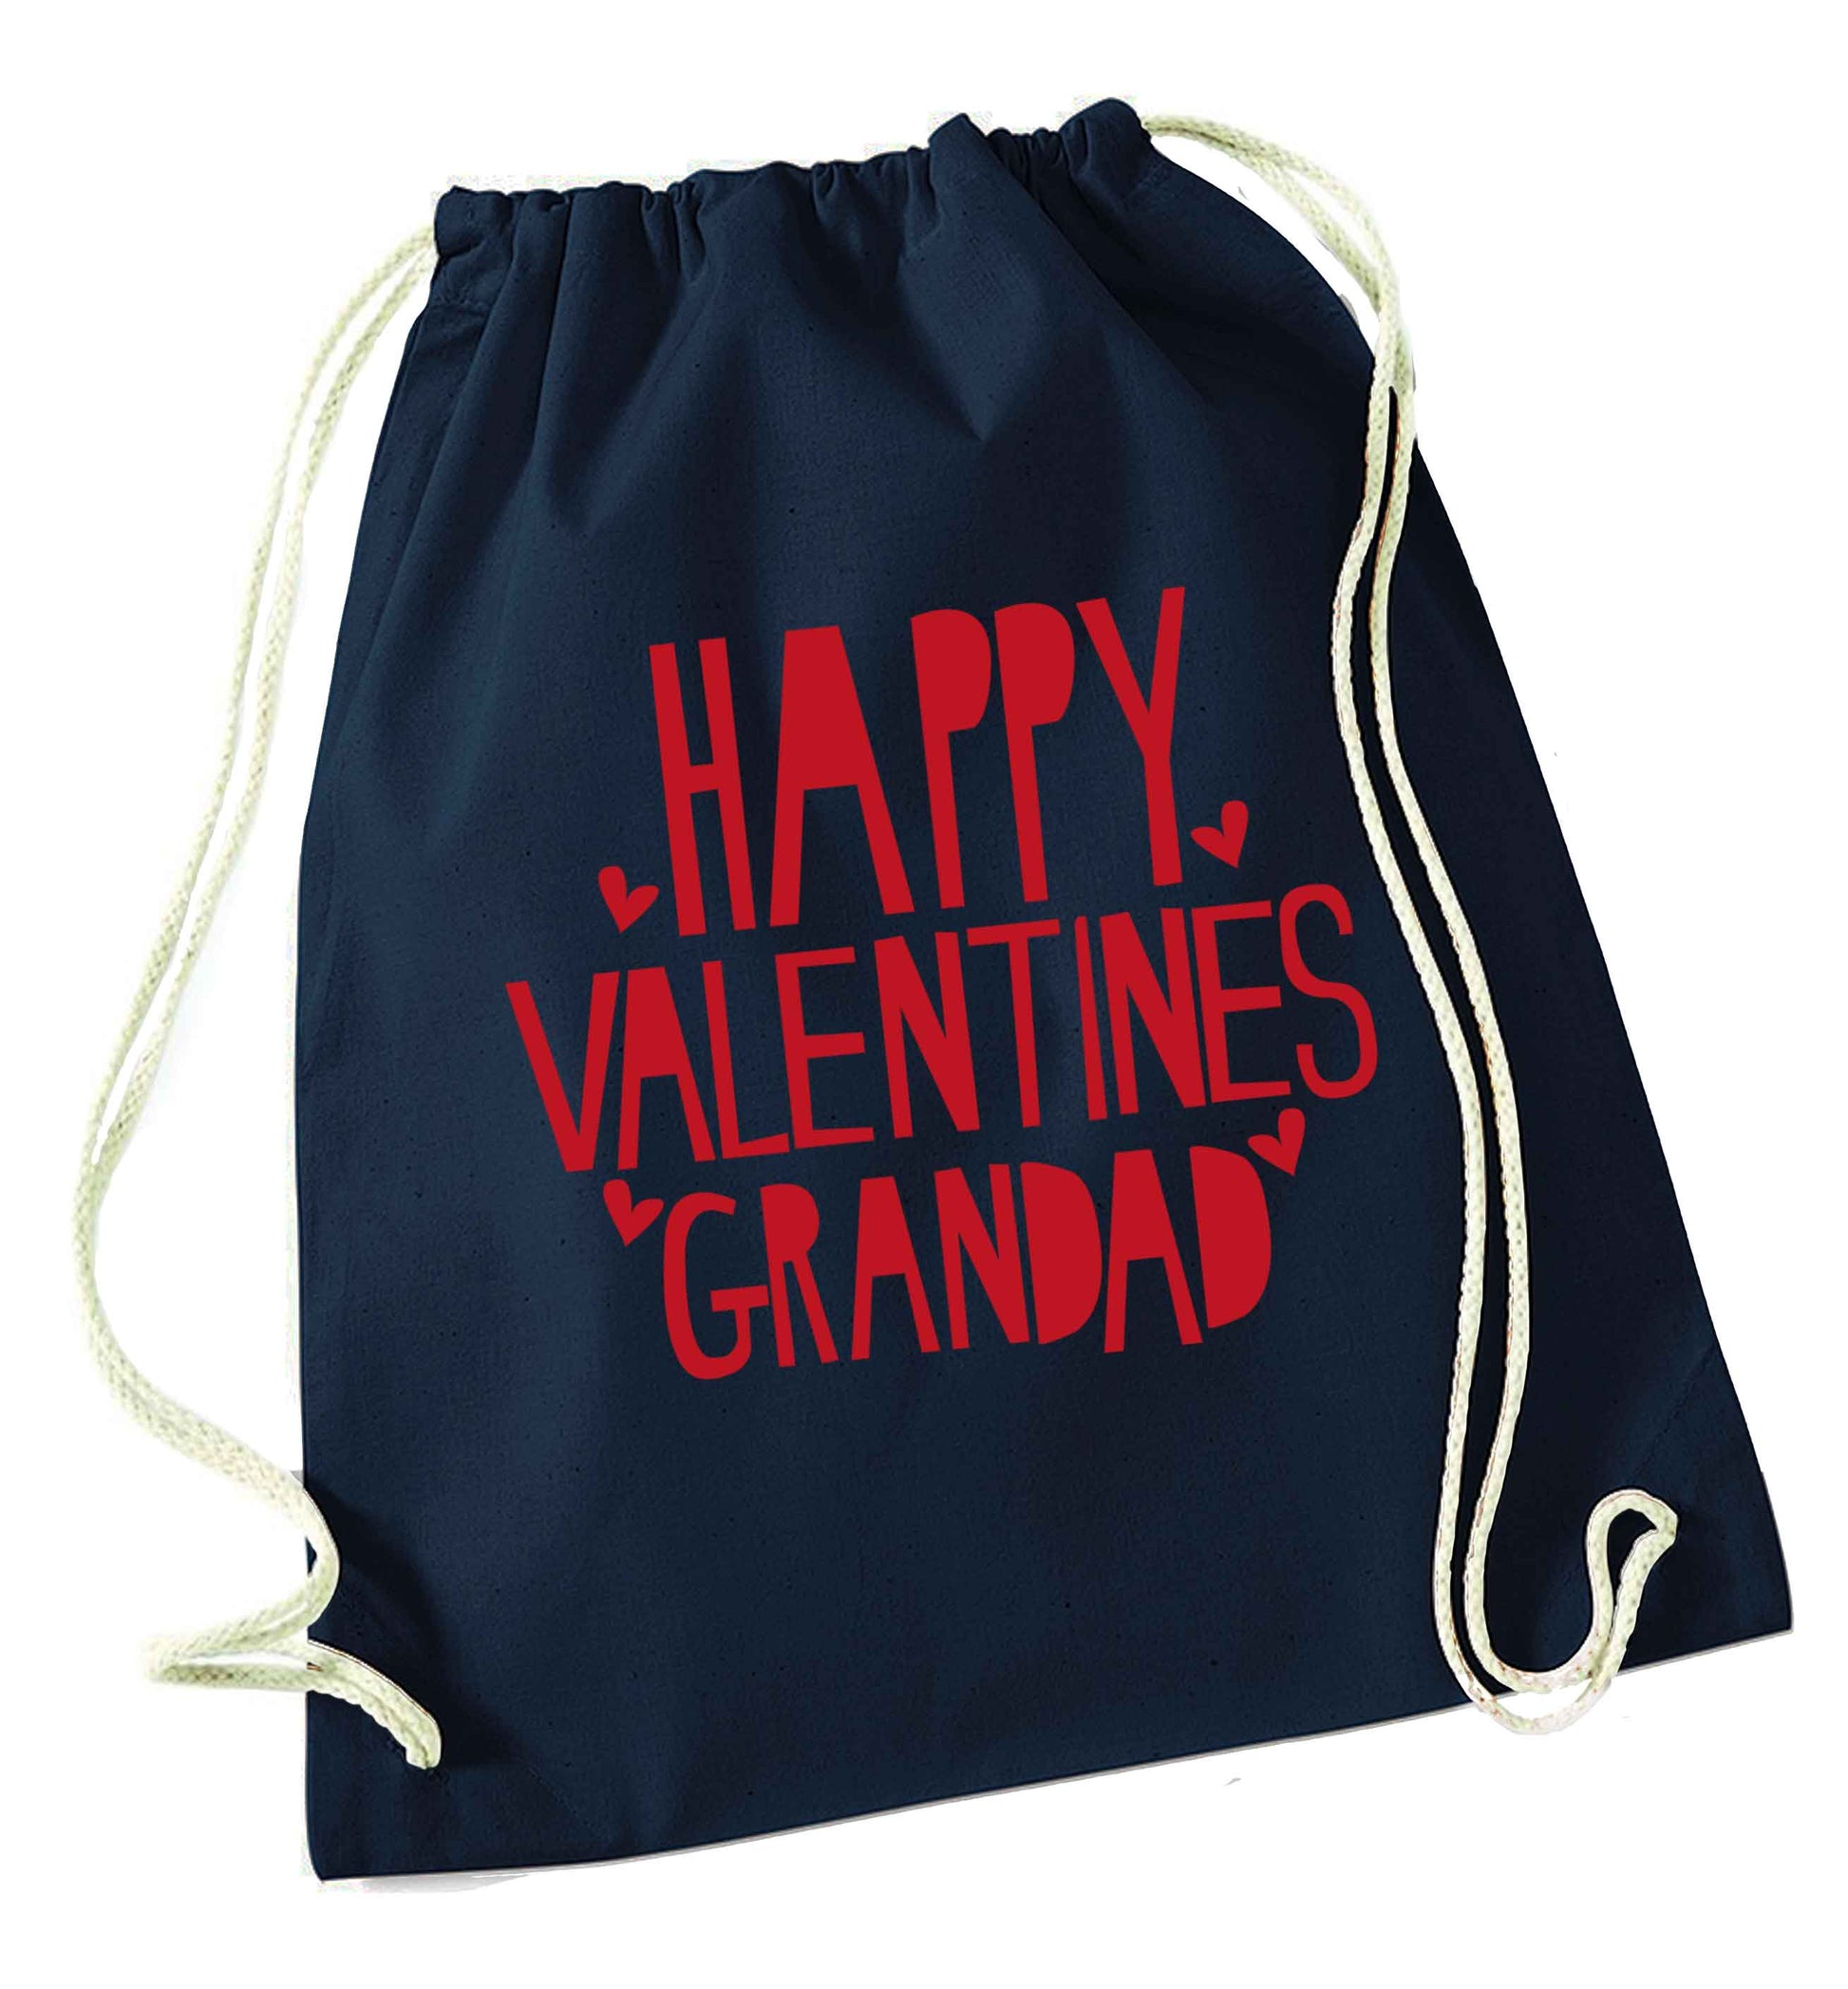 Happy valentines grandad navy drawstring bag